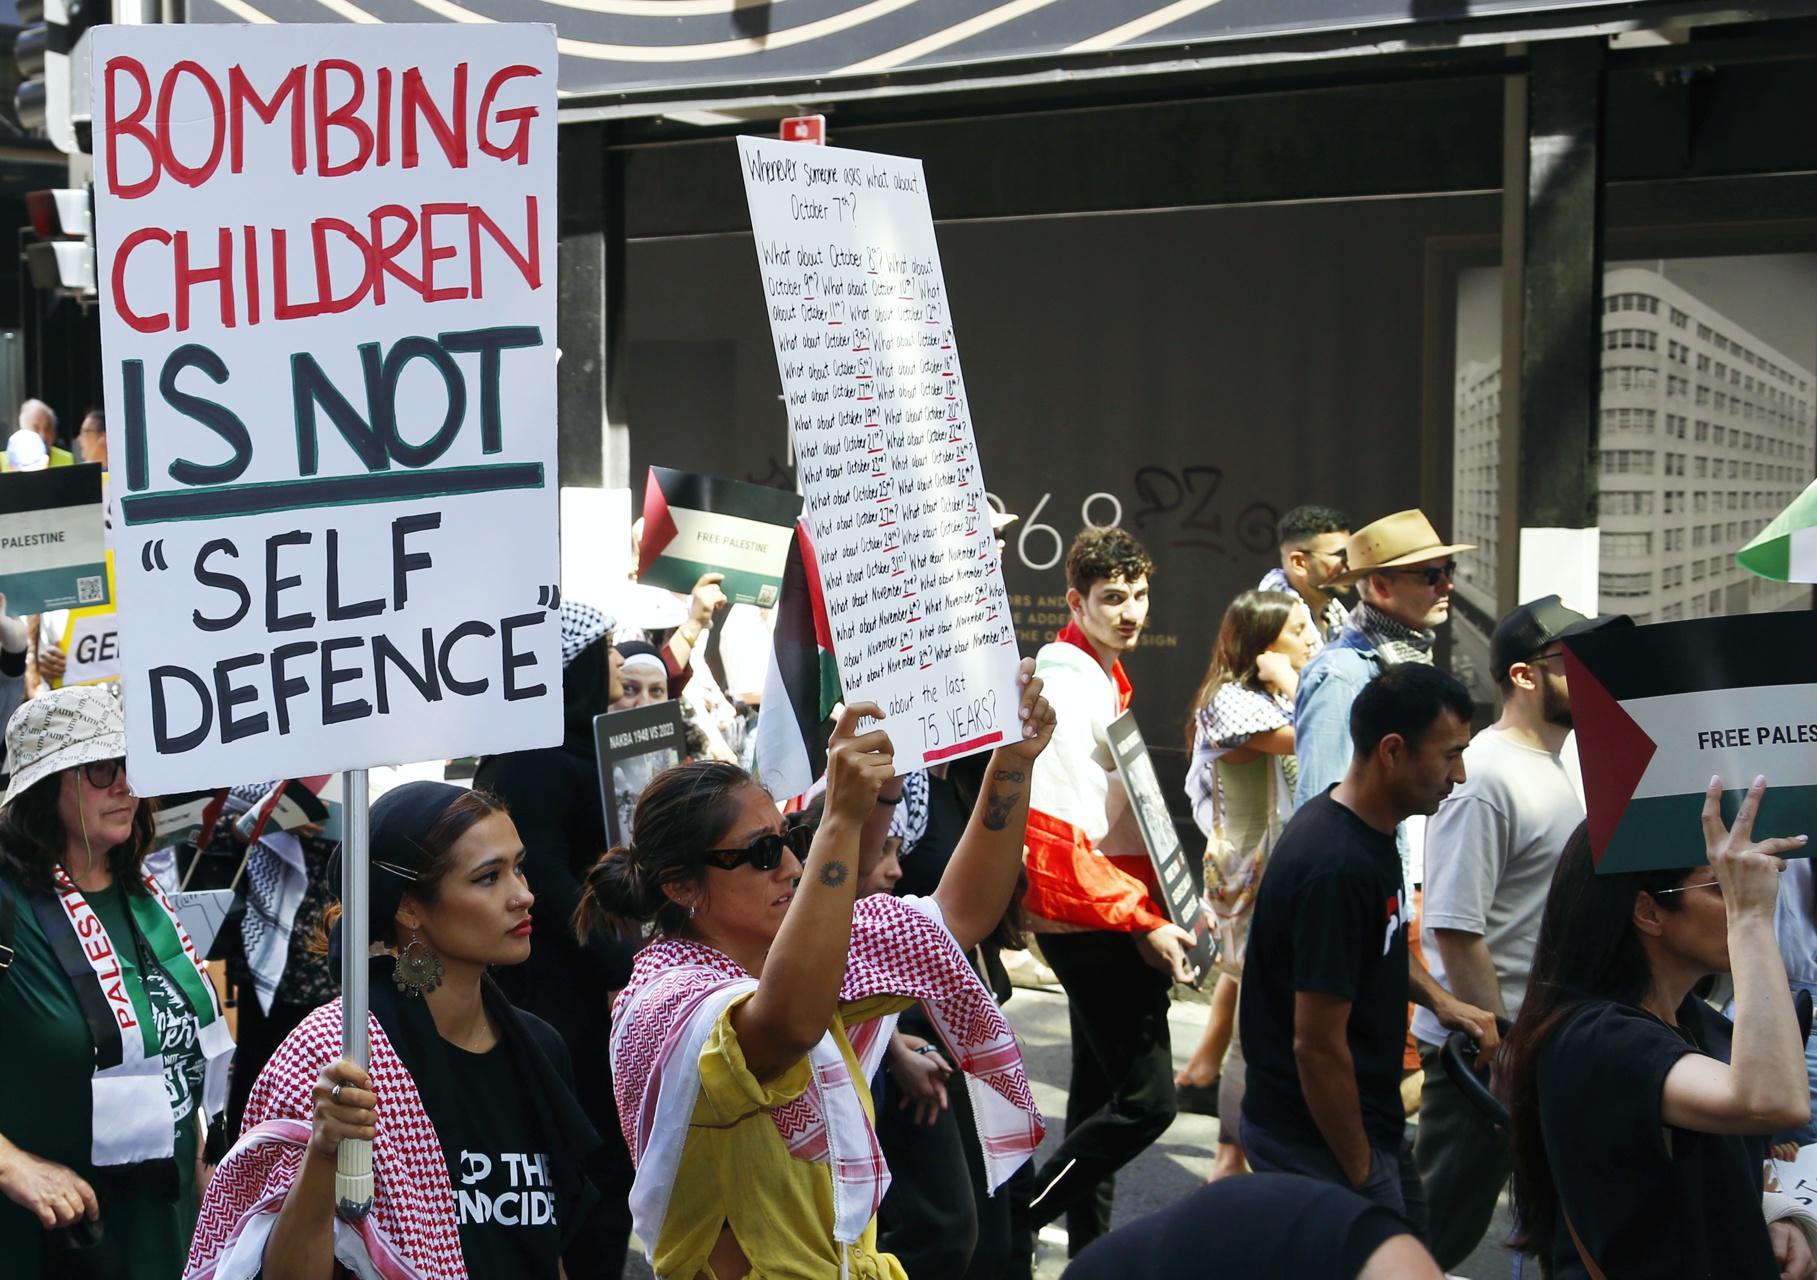 Bombing children is not self defence, Gadi/Sydney